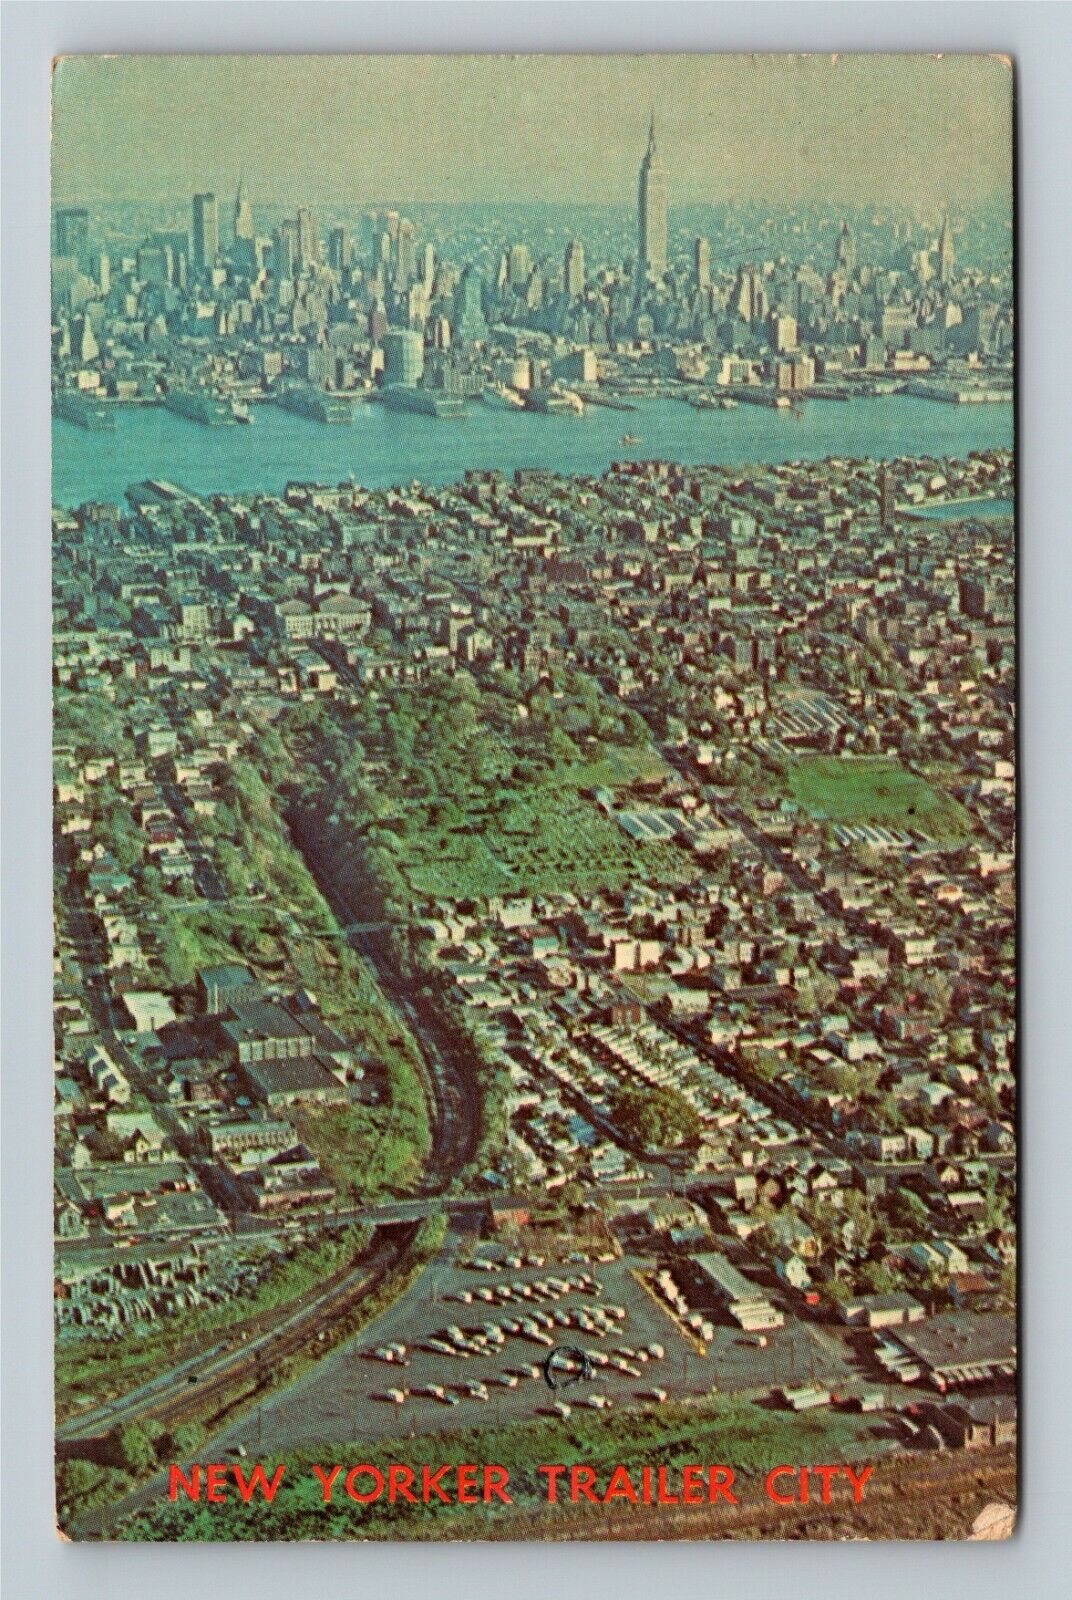 New Yorker Trailer City NJ-New Jersey, NYC Skyscrapers, c1965 Vintage Postcard